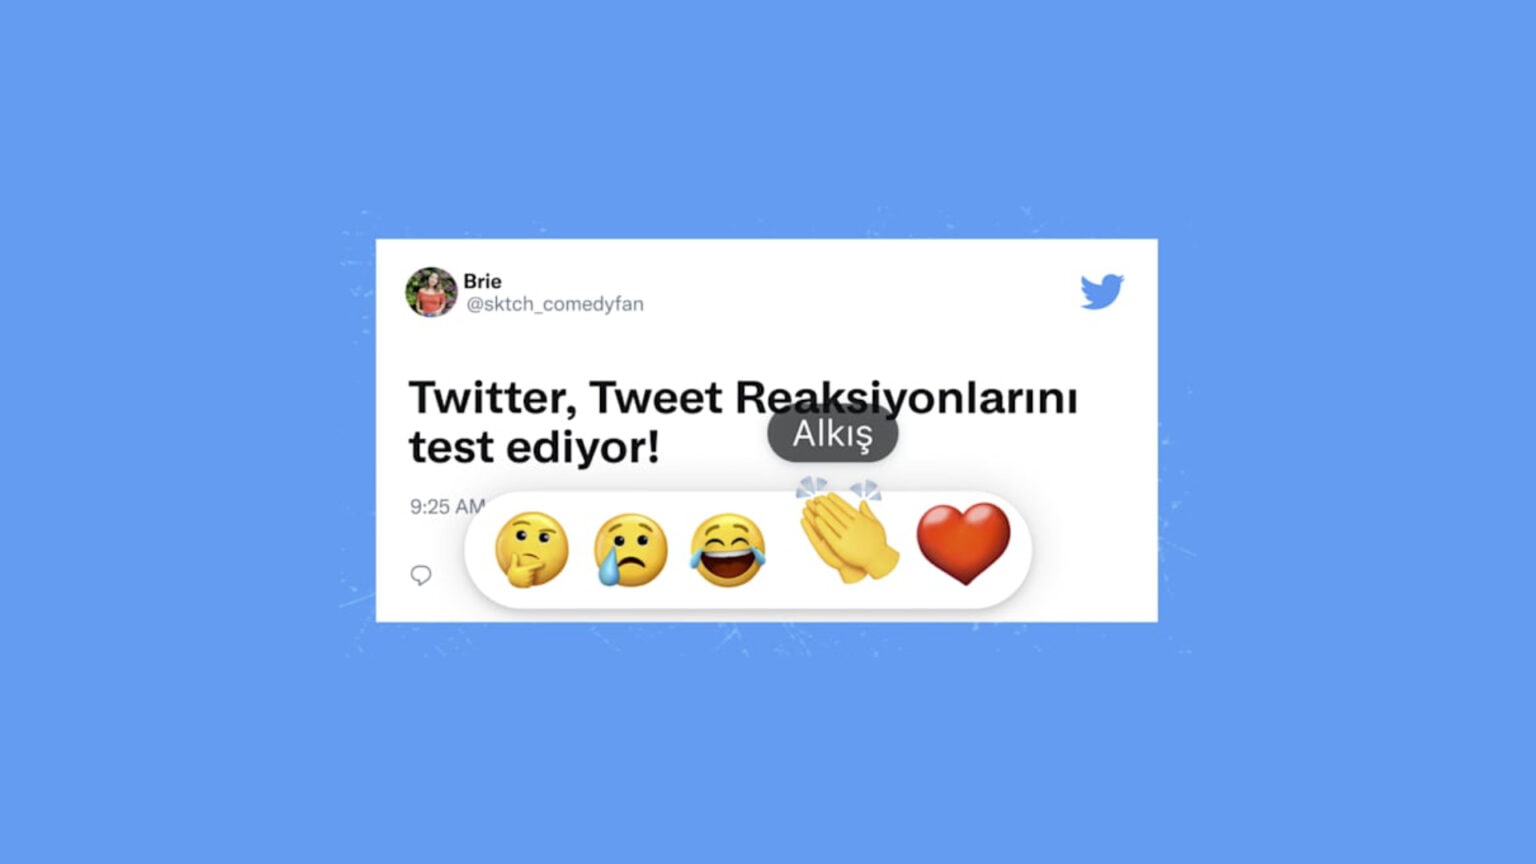 Twitter emoji reactions